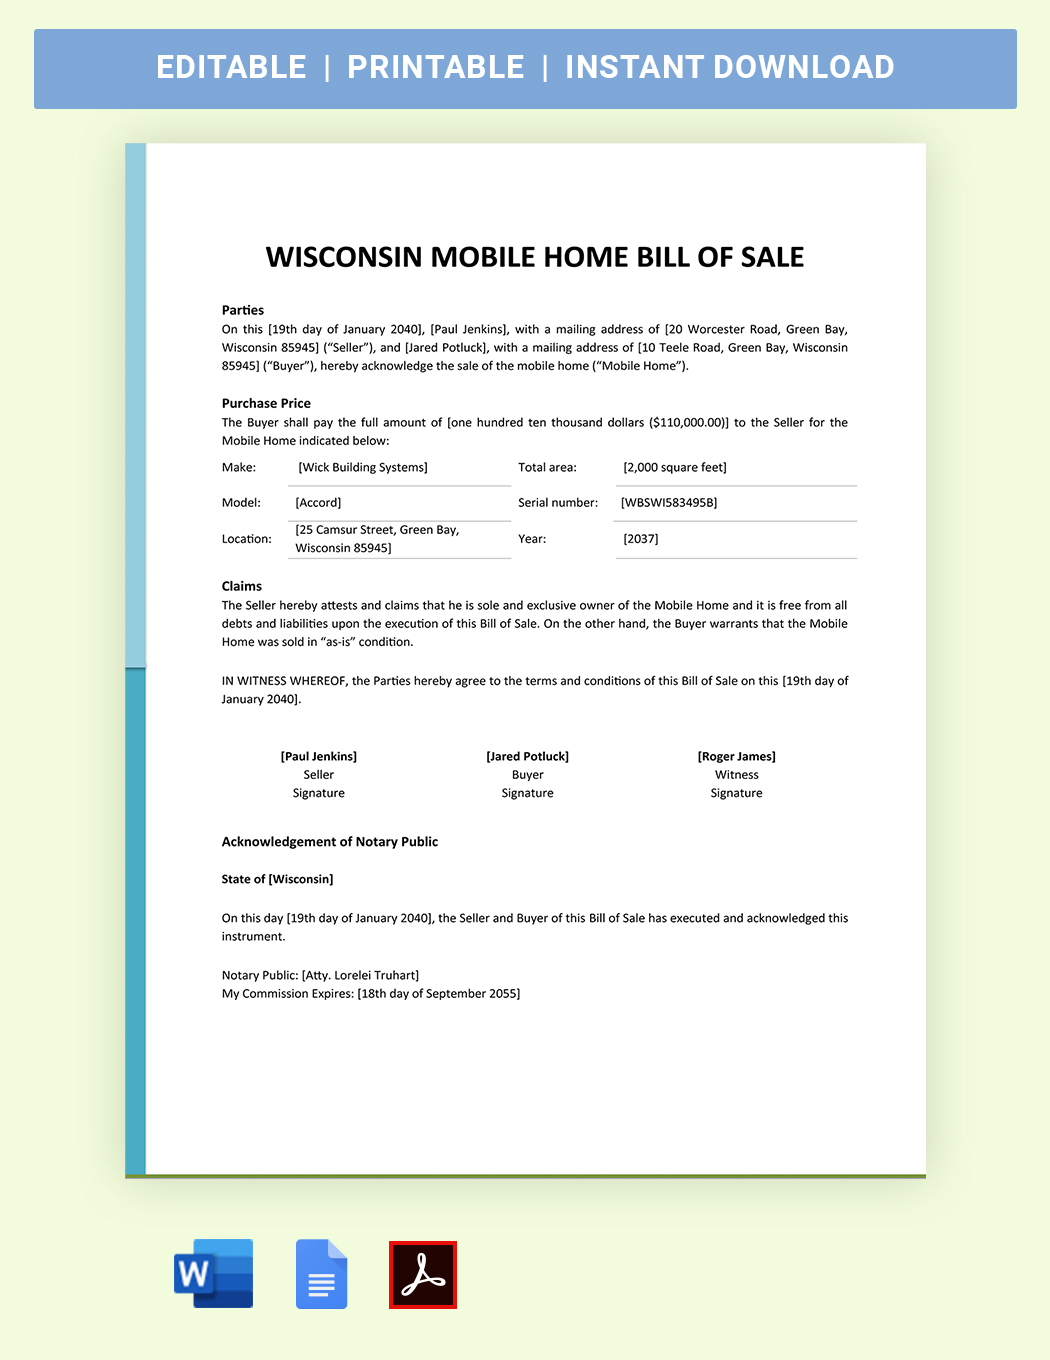 Kentucky Mobile Home Bill of Sale Template - Google Docs, Word, PDF